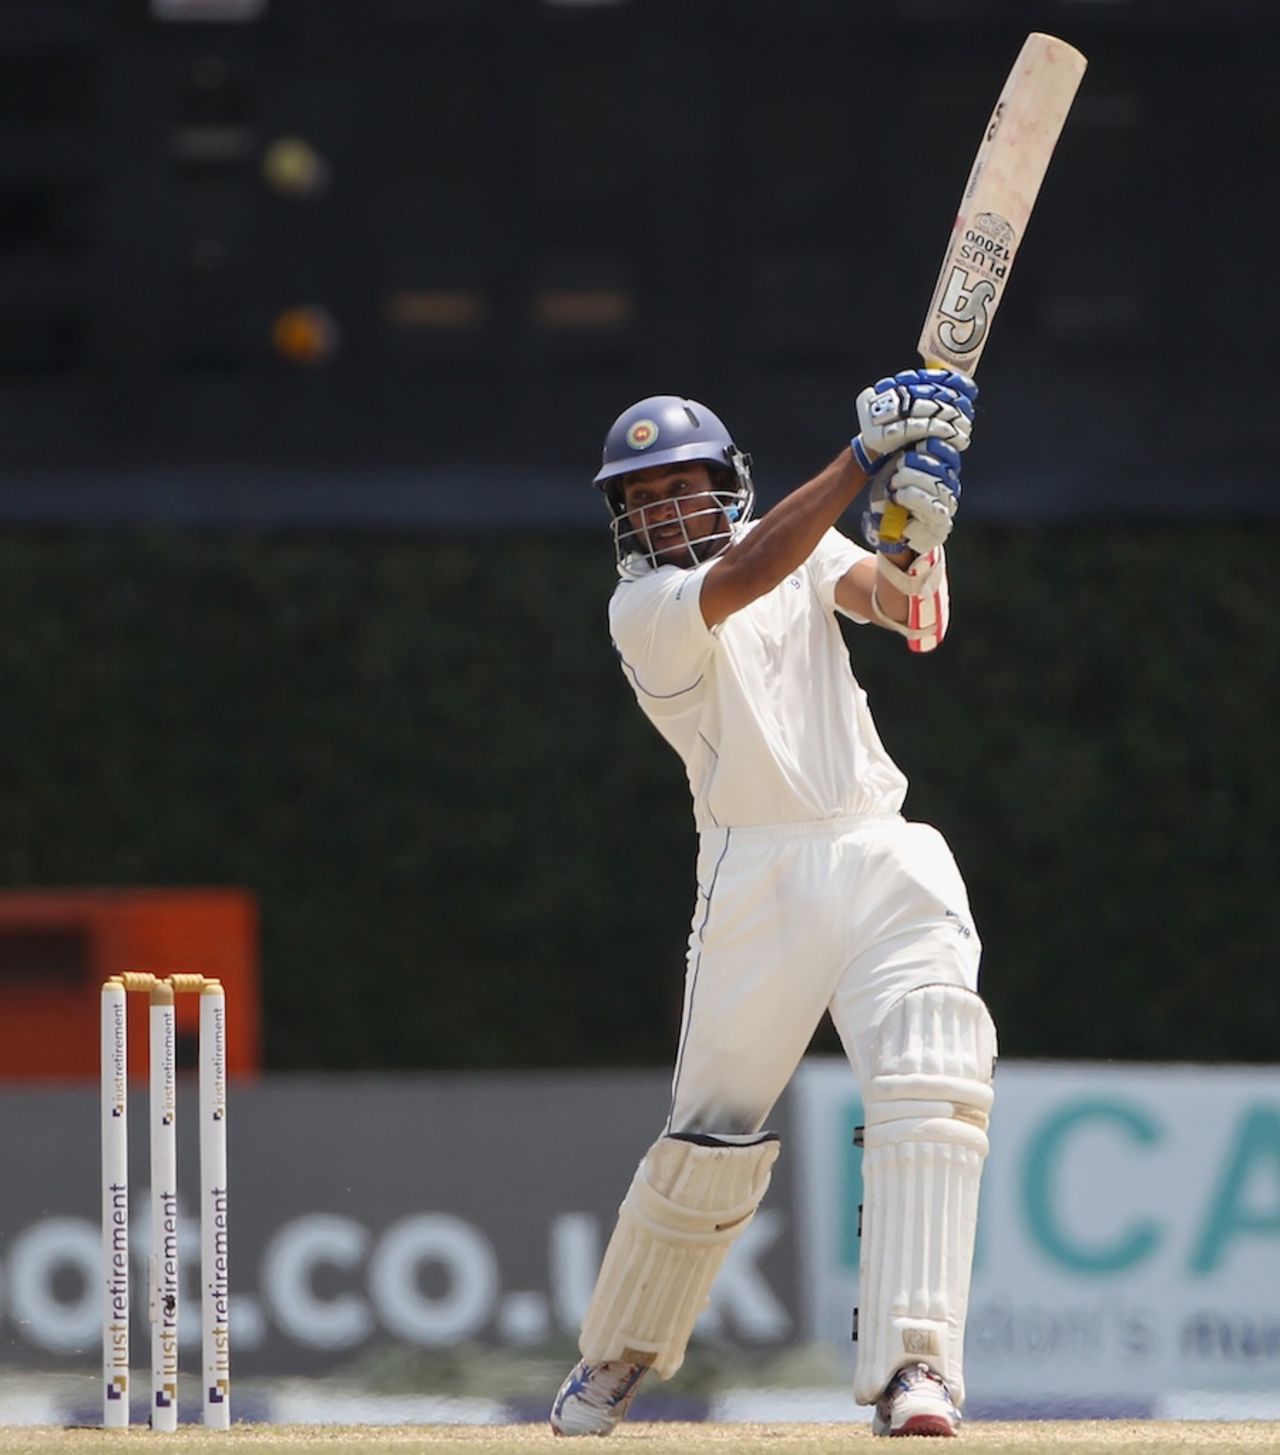 Tillakaratne Dilshan on the attack, Sri Lanka v England, 2nd Test, Colombo, P Sara Oval, 4th day, April 6, 2012